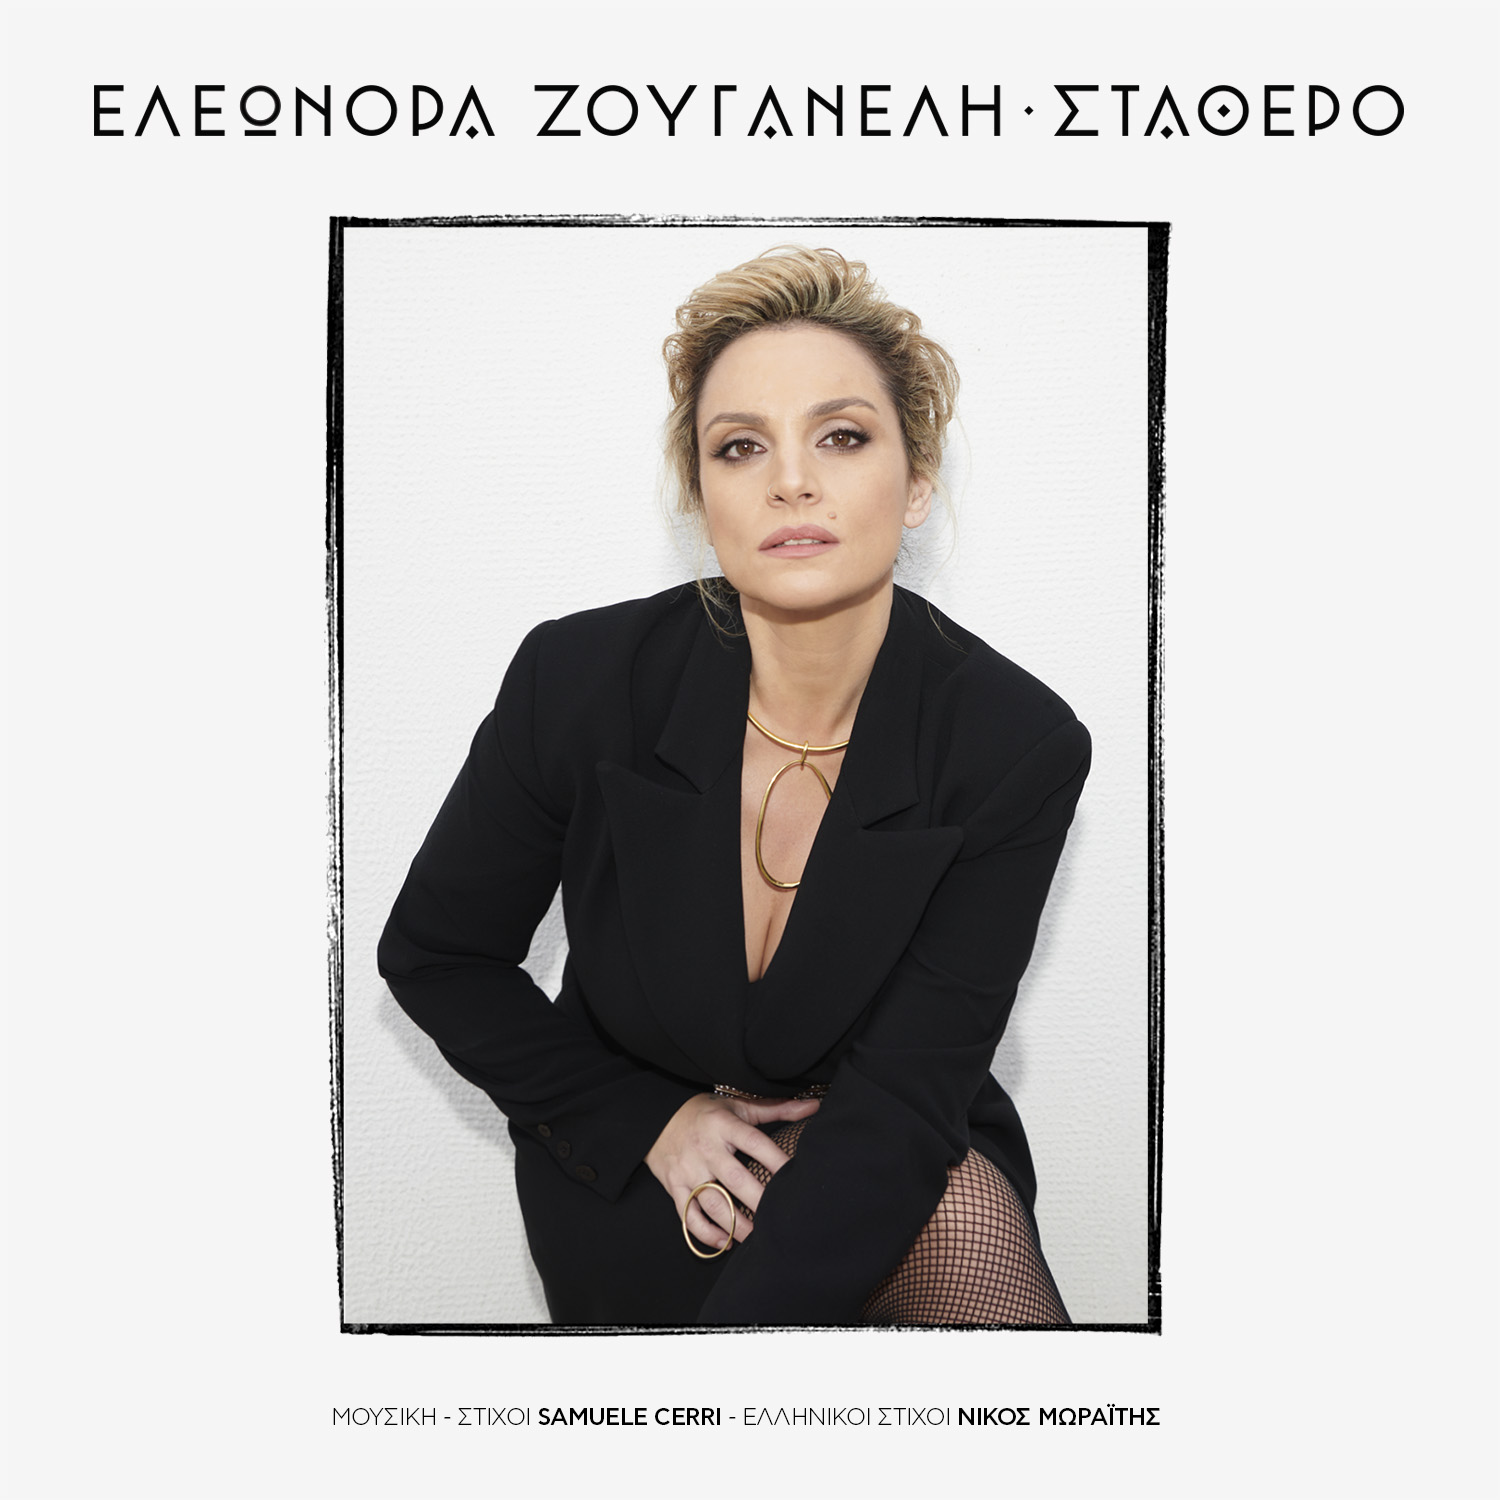 Nέο  Single  της Ελεωνόρα Ζουγανέλη ”σταθερό”